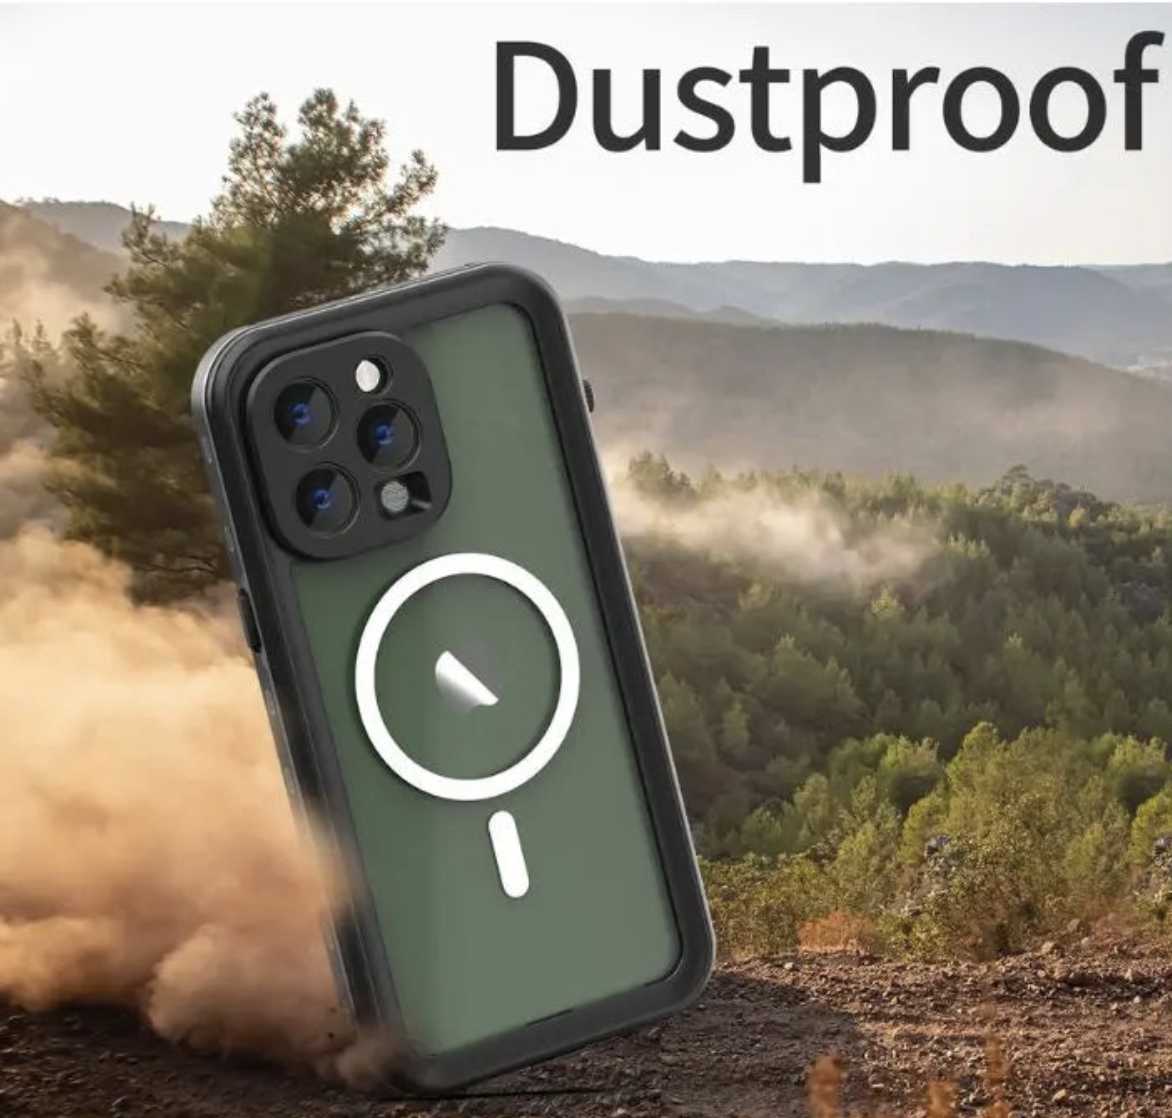 Waterproof iPhone Apple Cases